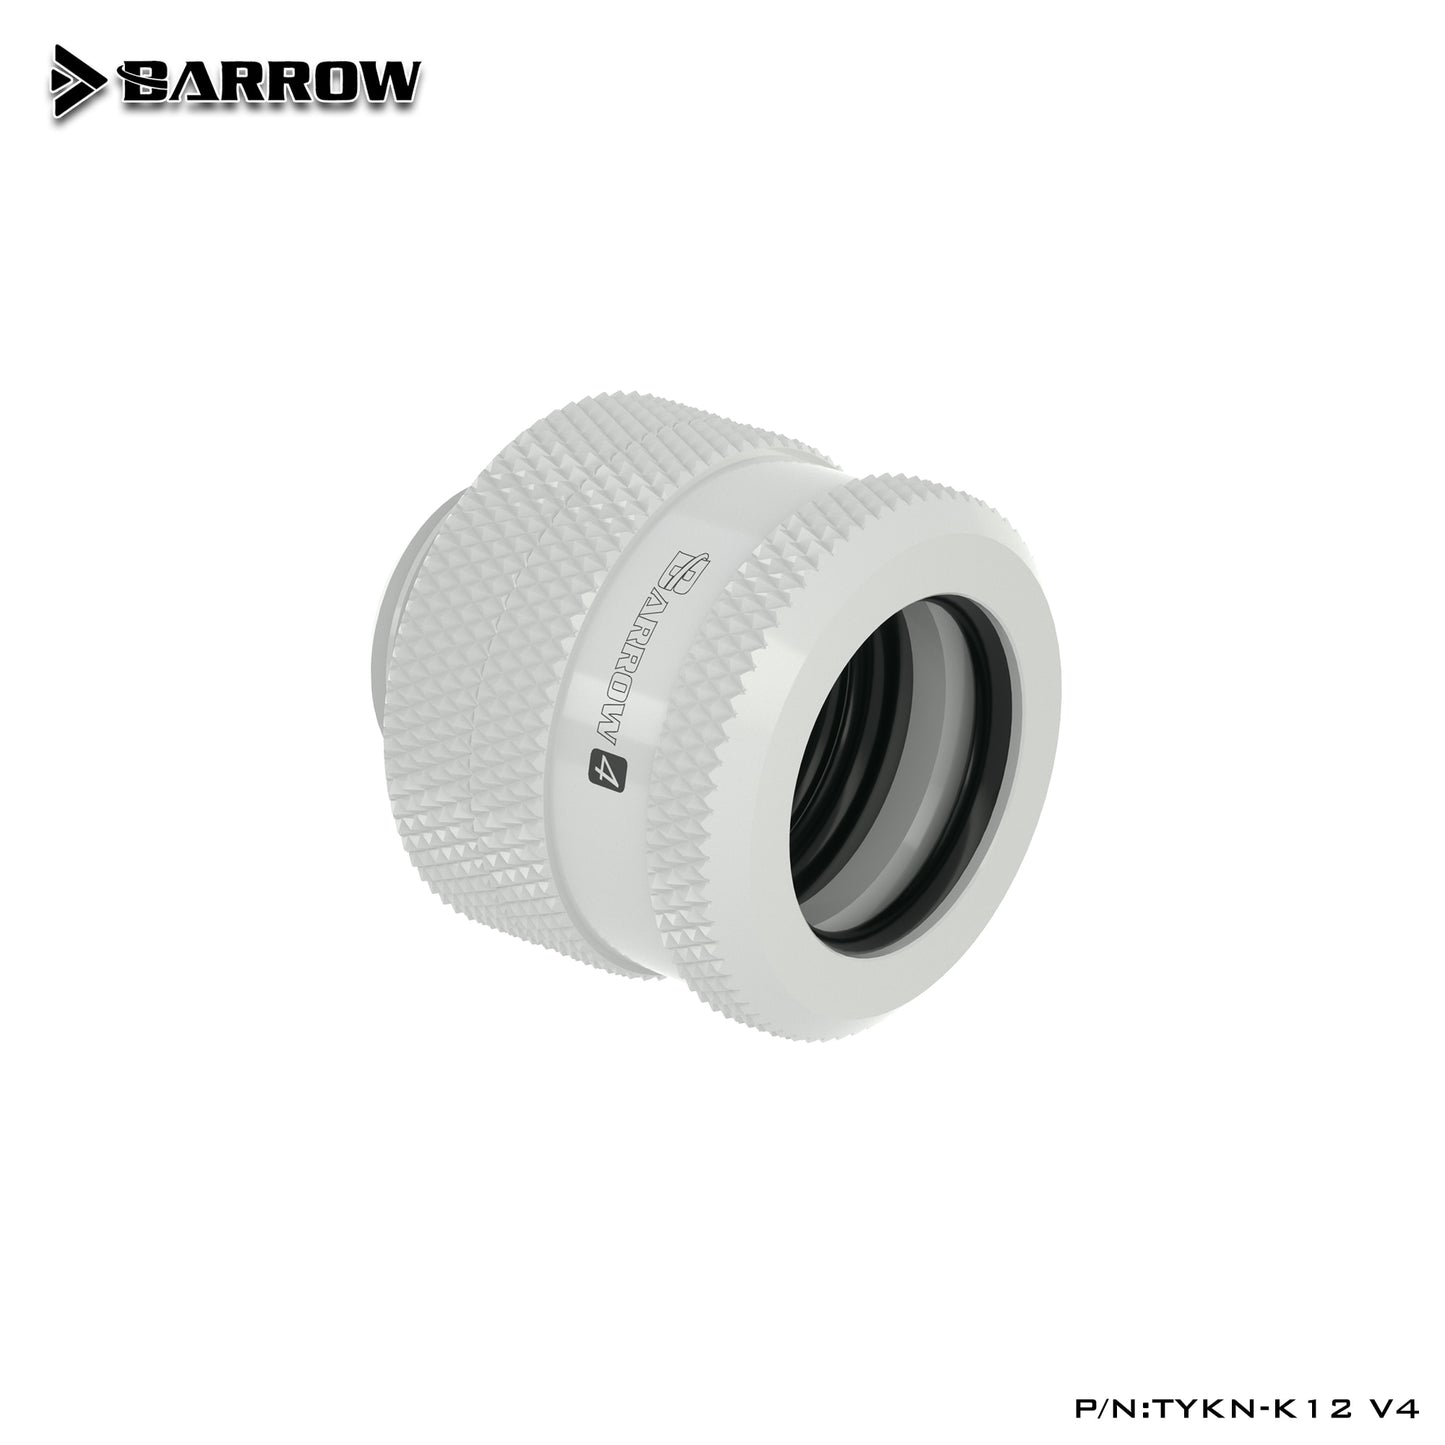 Barrow TYKN-K12 V4, raccords pour tubes durs OD12mm, adaptateurs G1/4 pour tubes durs OD12mm